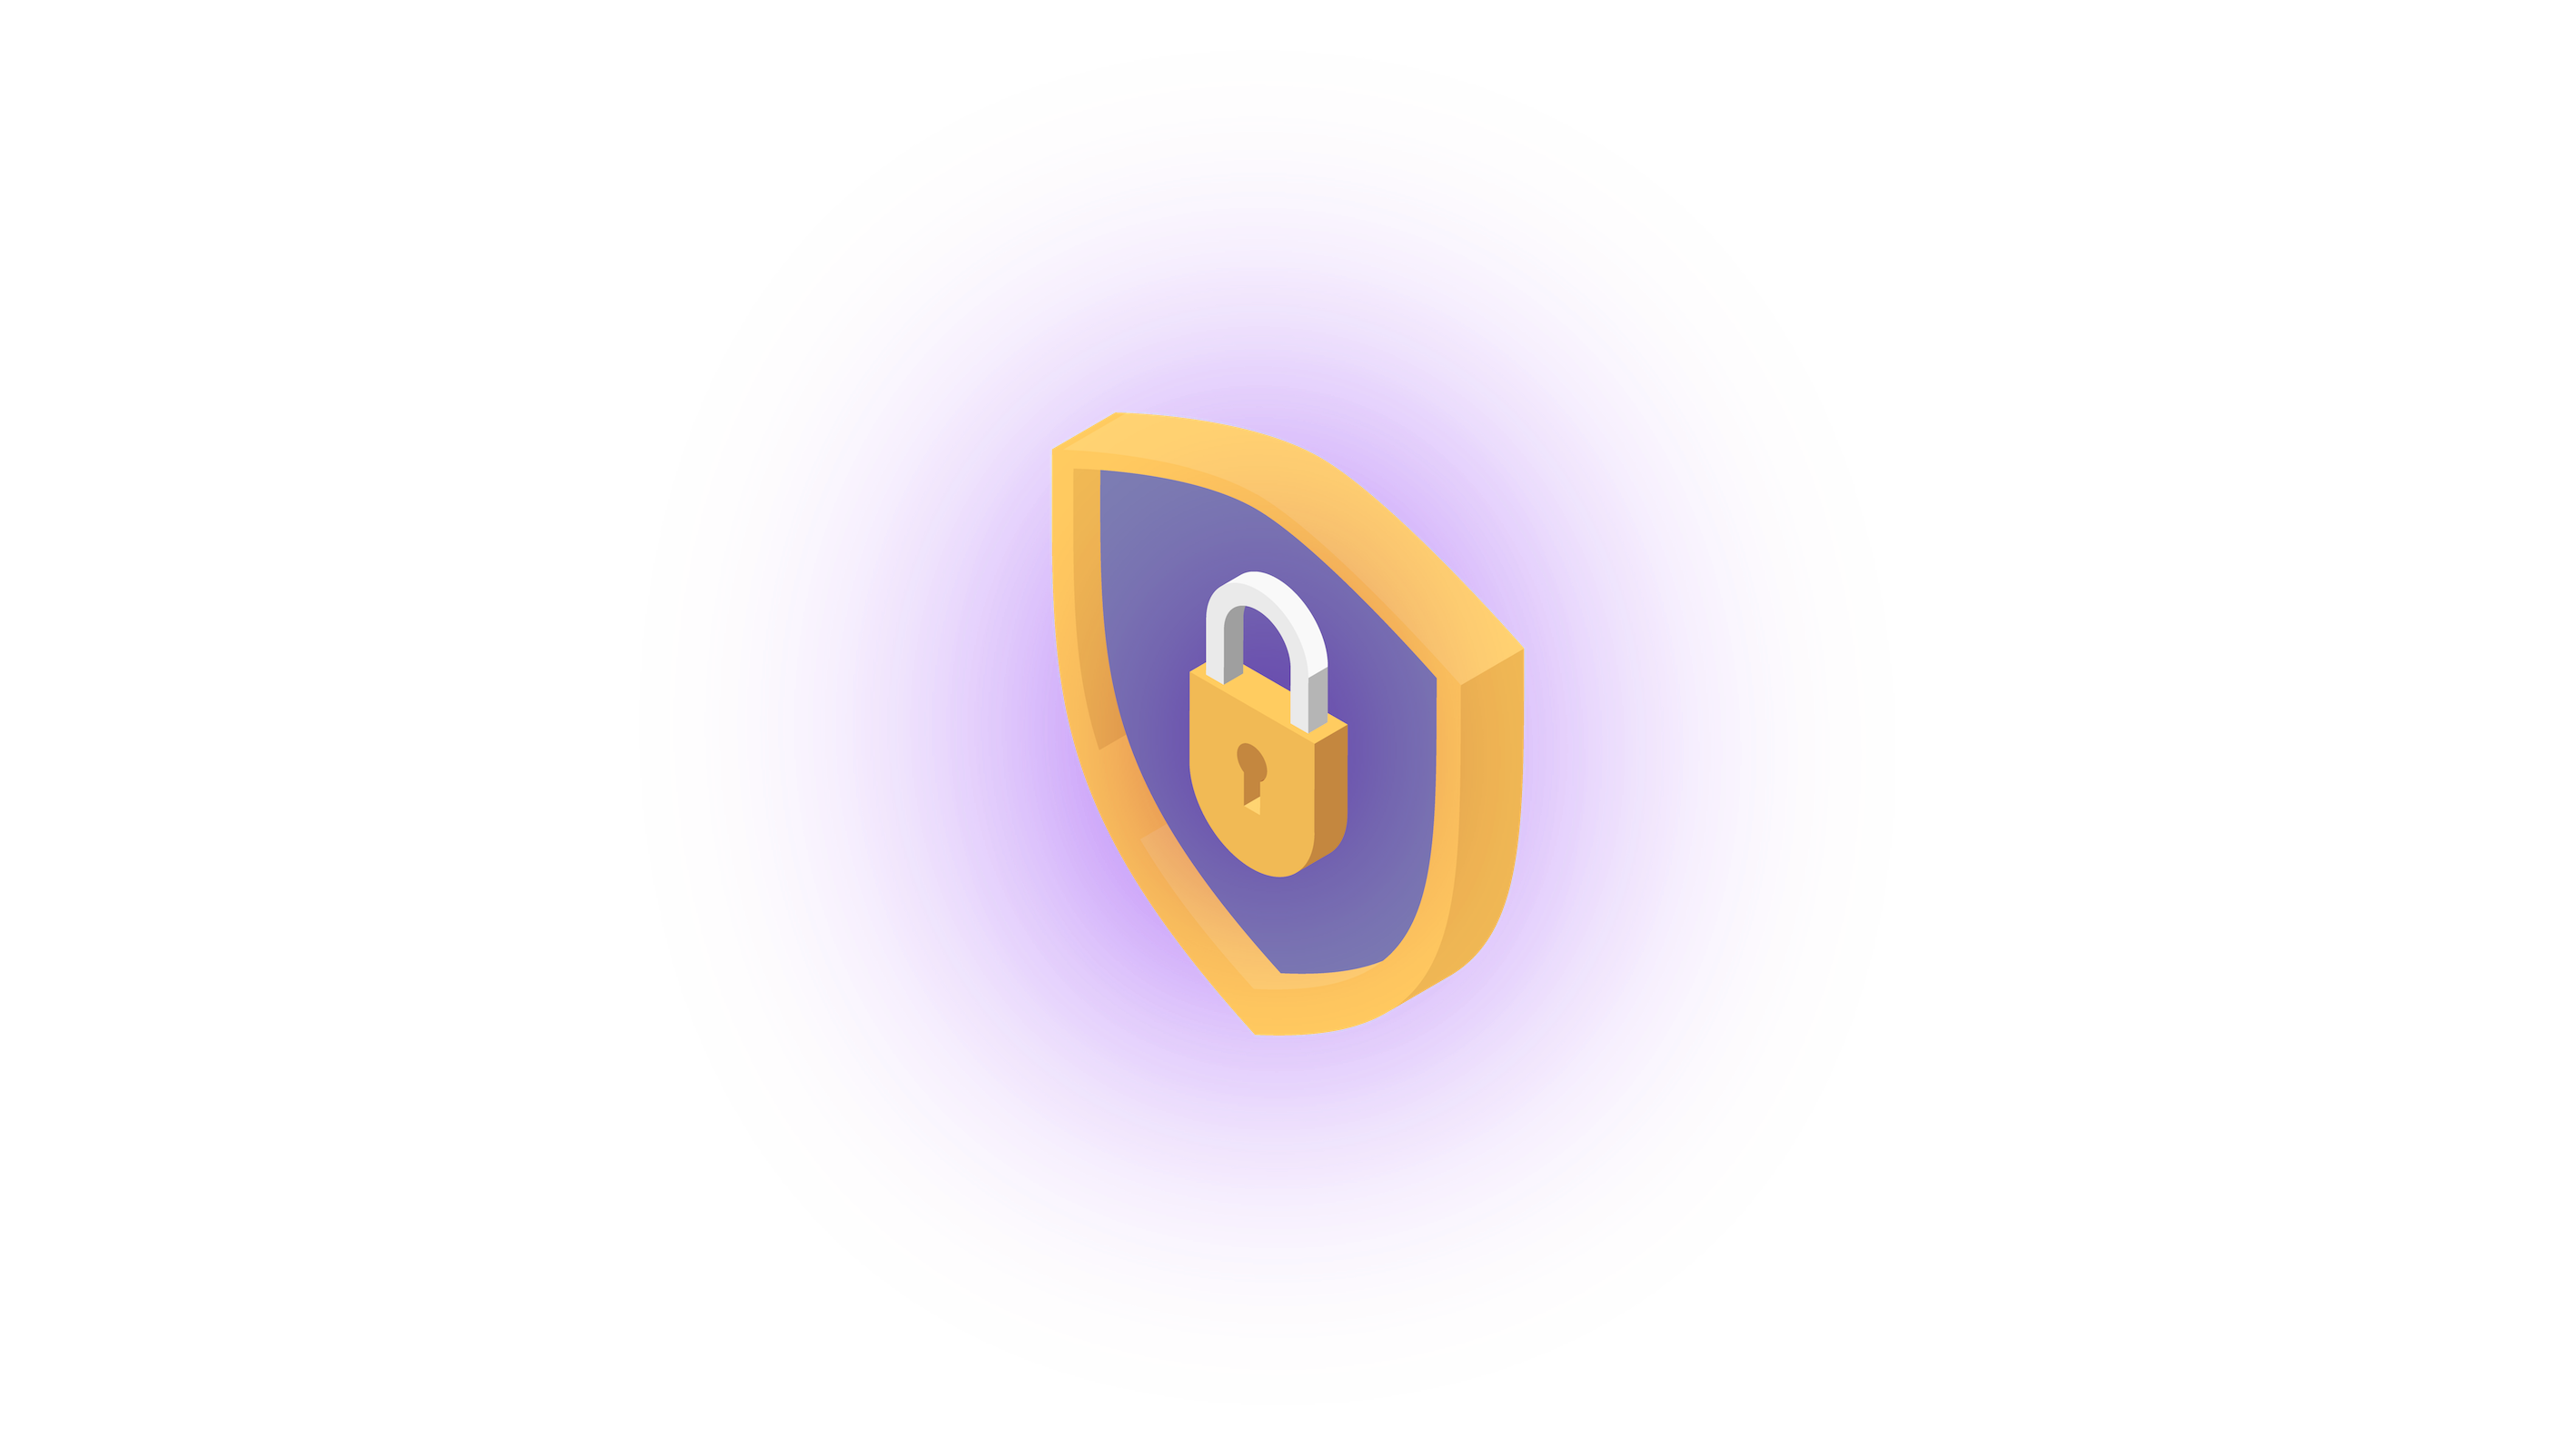 What are Coinmetro's security protocols?